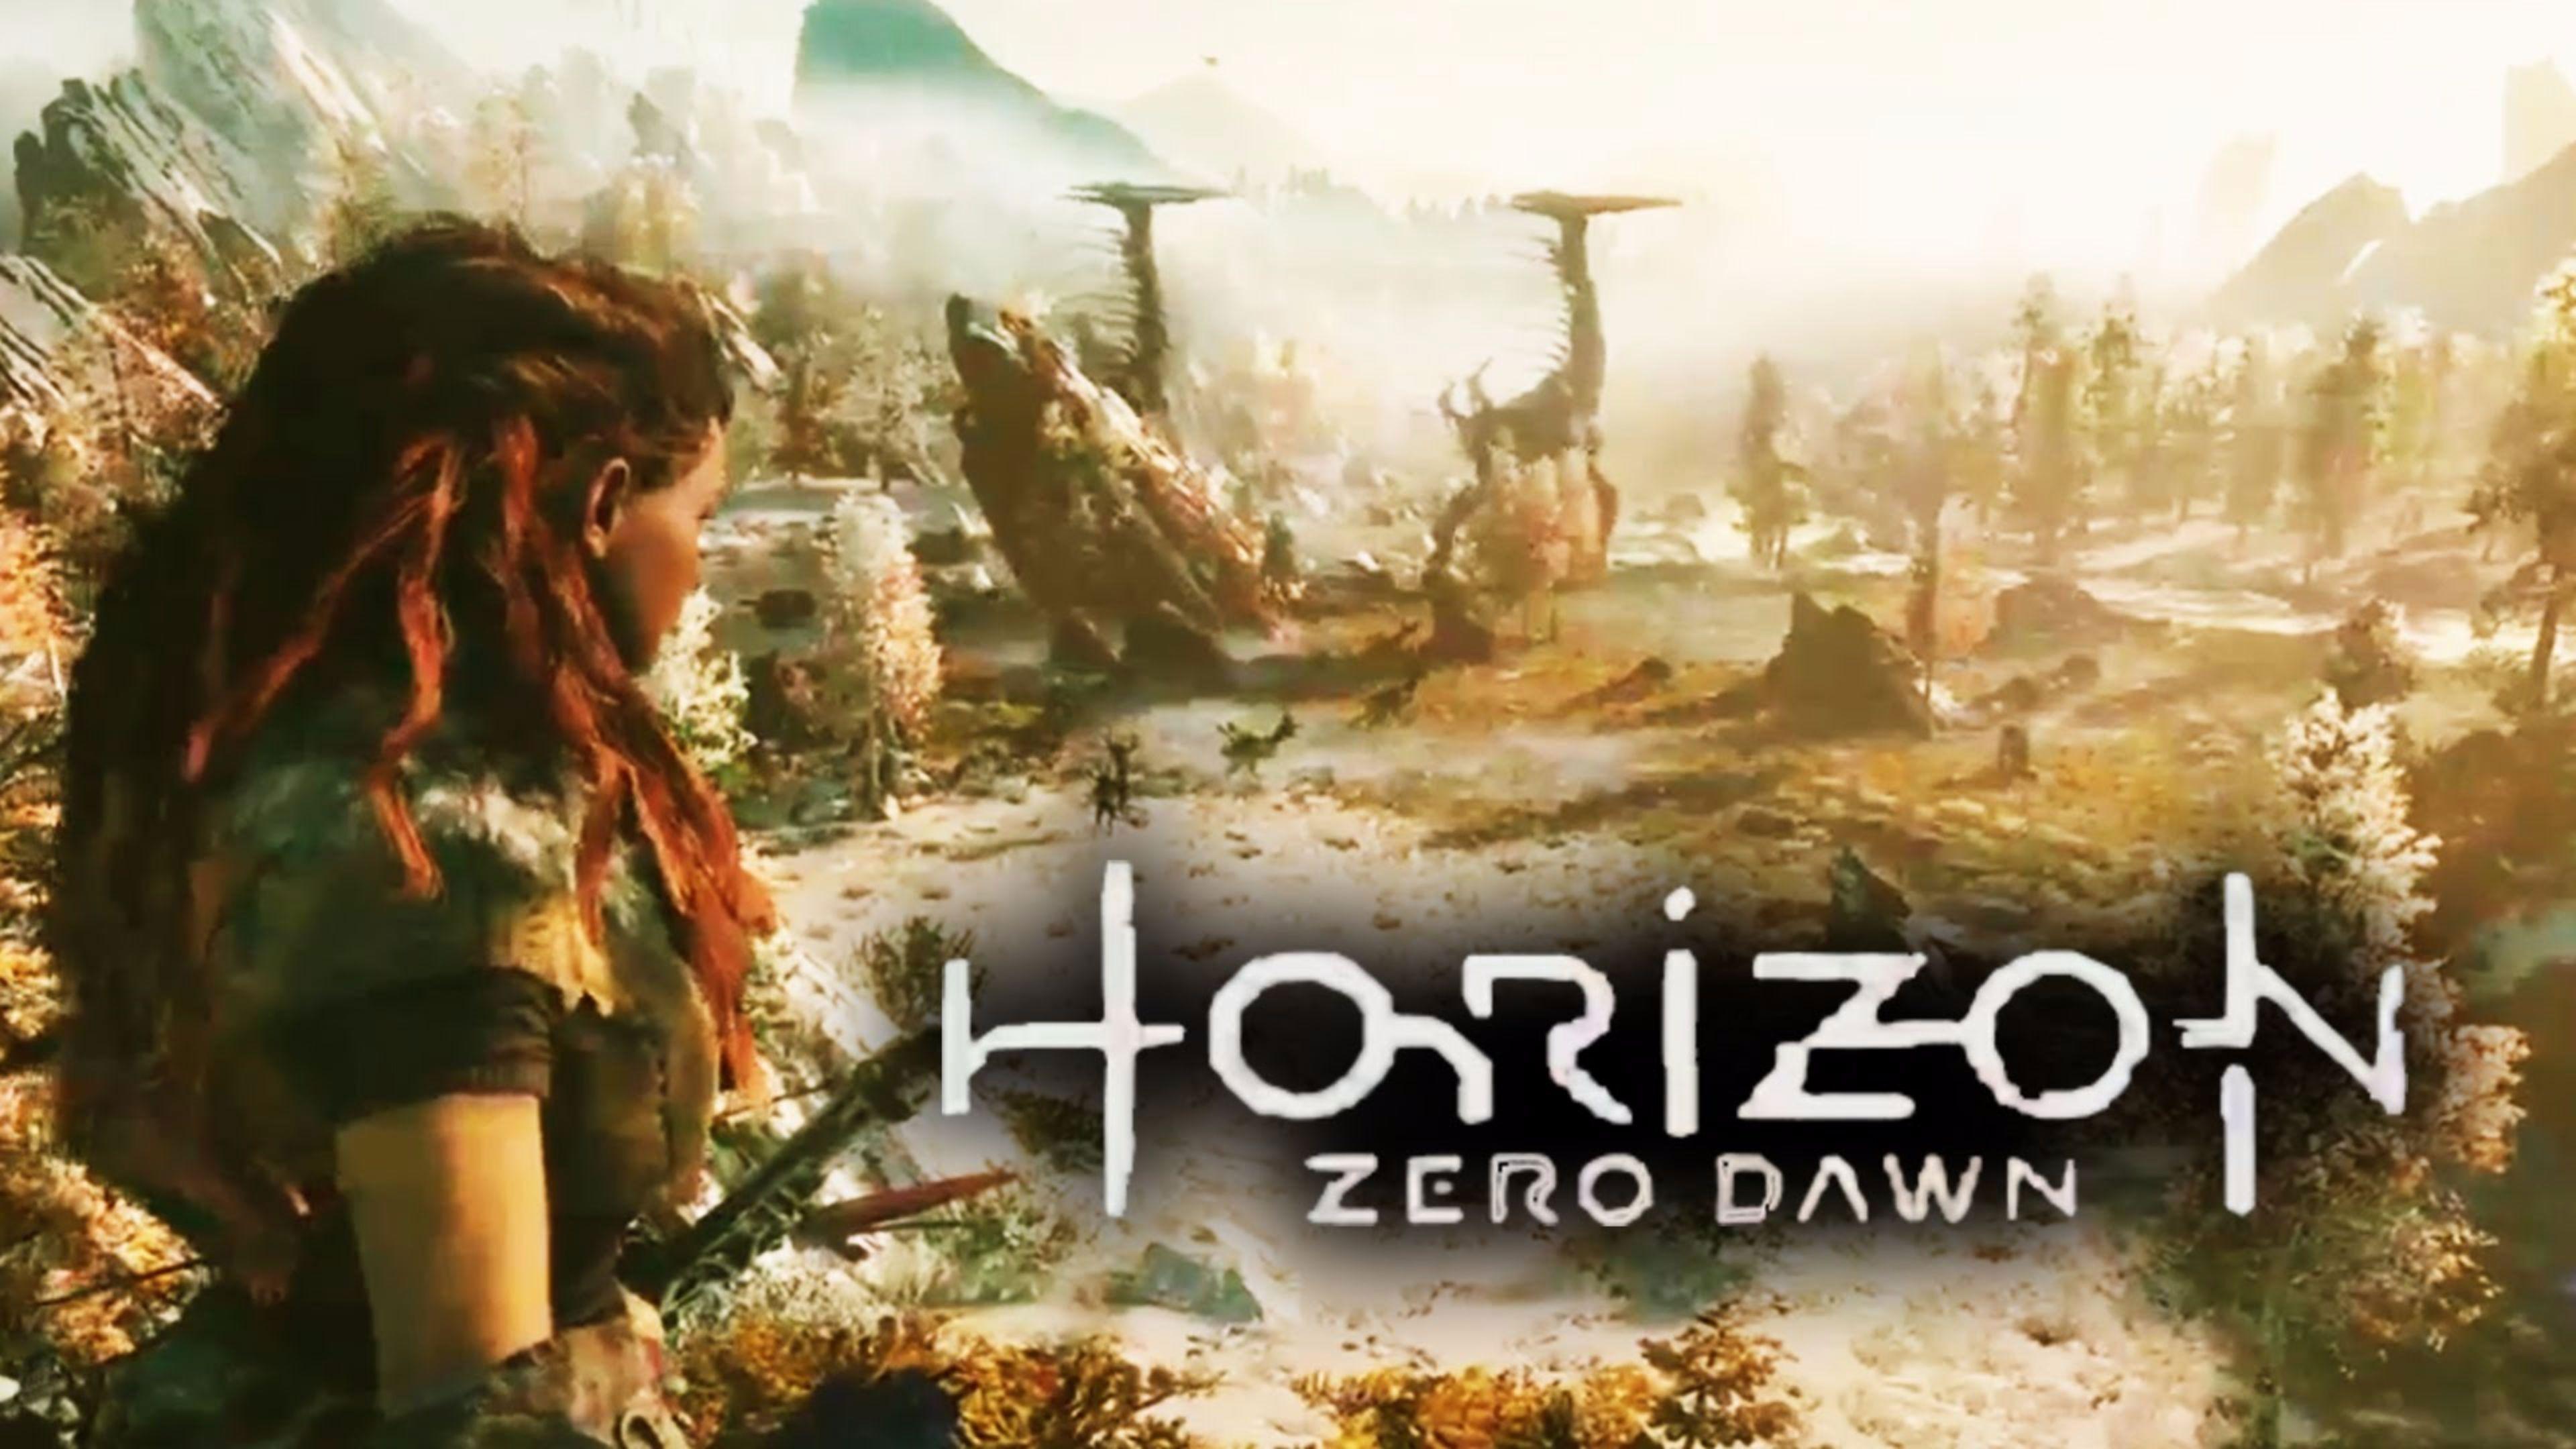 Horizon Zero Dawn Wallpaper in Ultra HDK